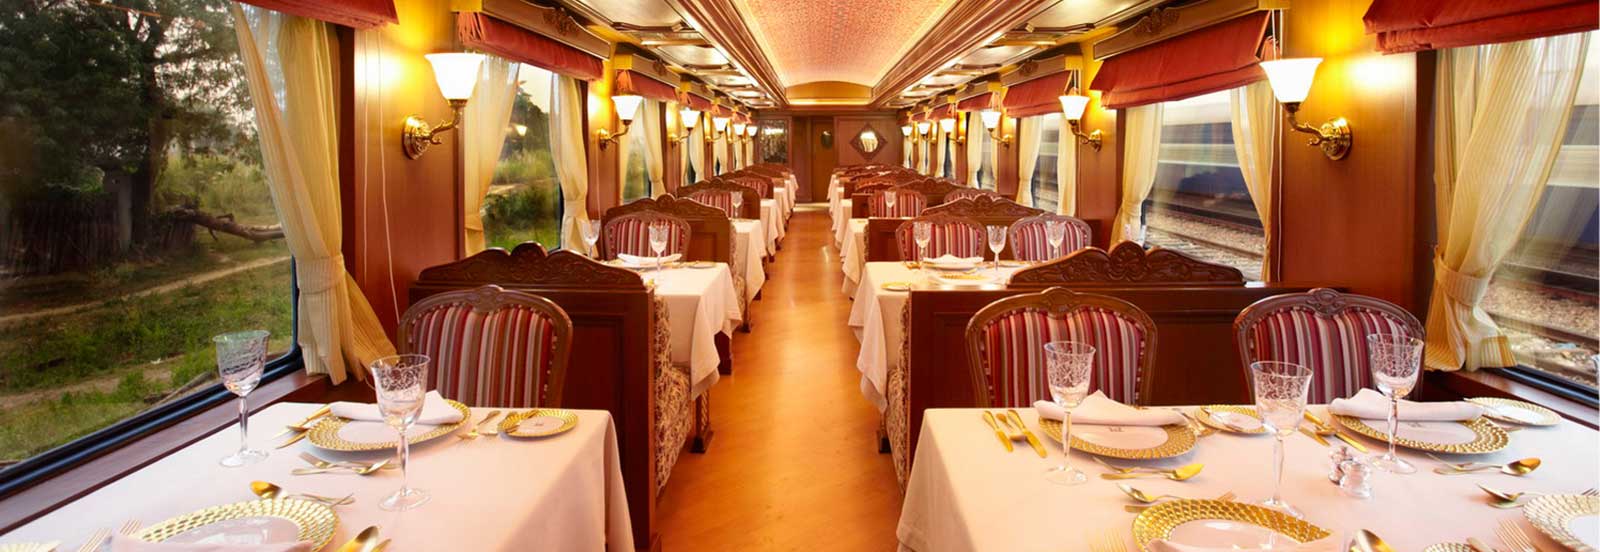 maharajas-express-luxury-train-dining-rang-mahal-restaurants